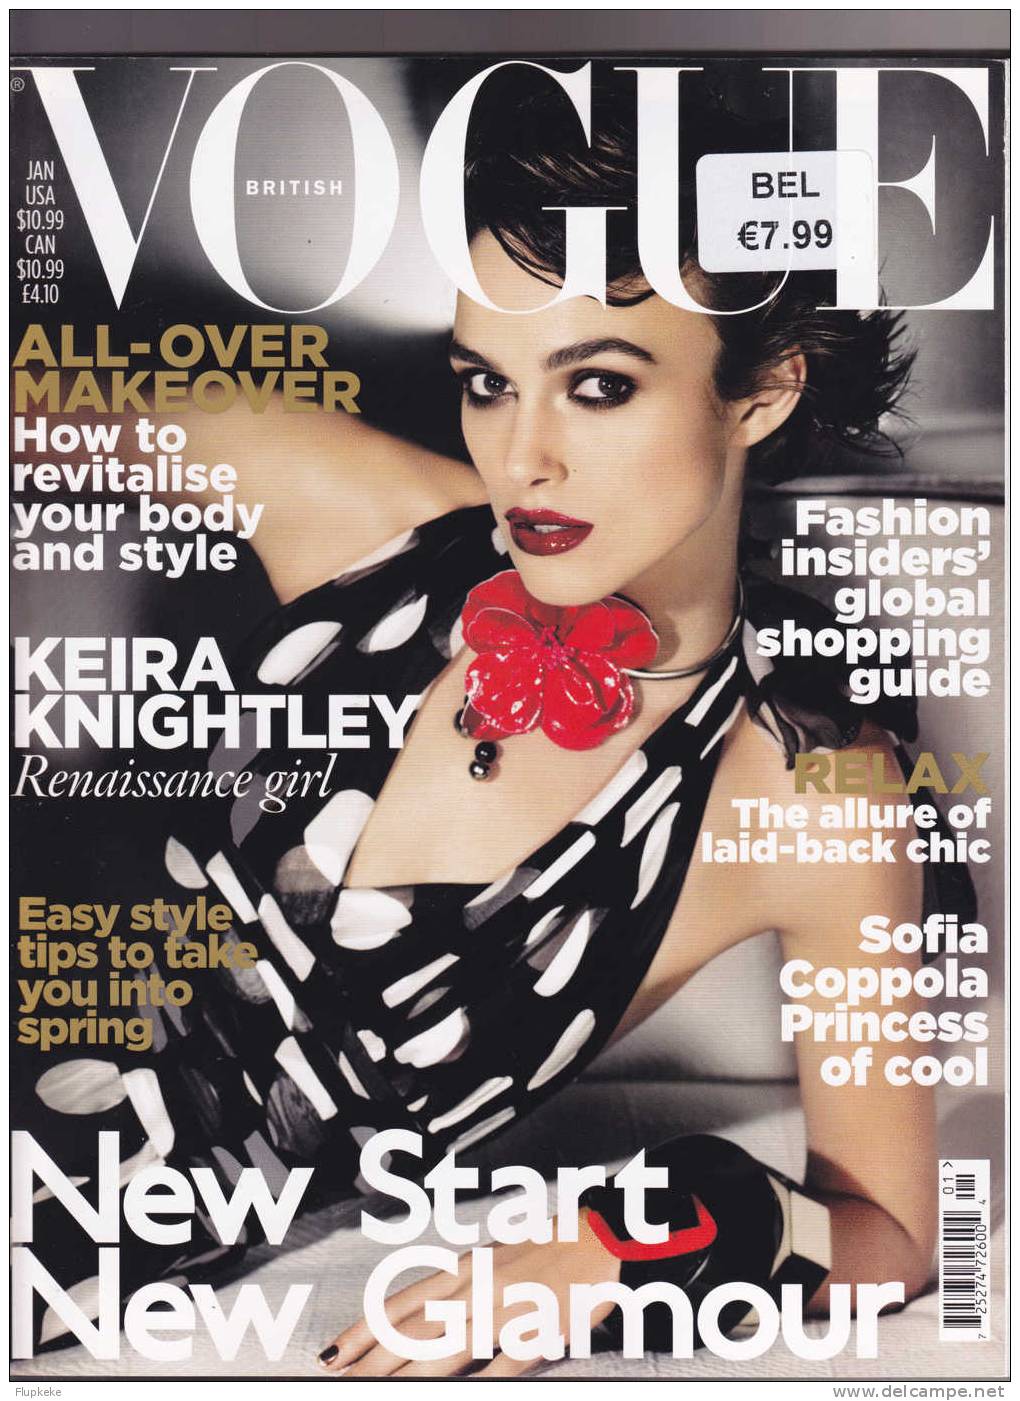 Vogue British 01 January 2011 Keira Knightley Renaissance Girl - Femminili